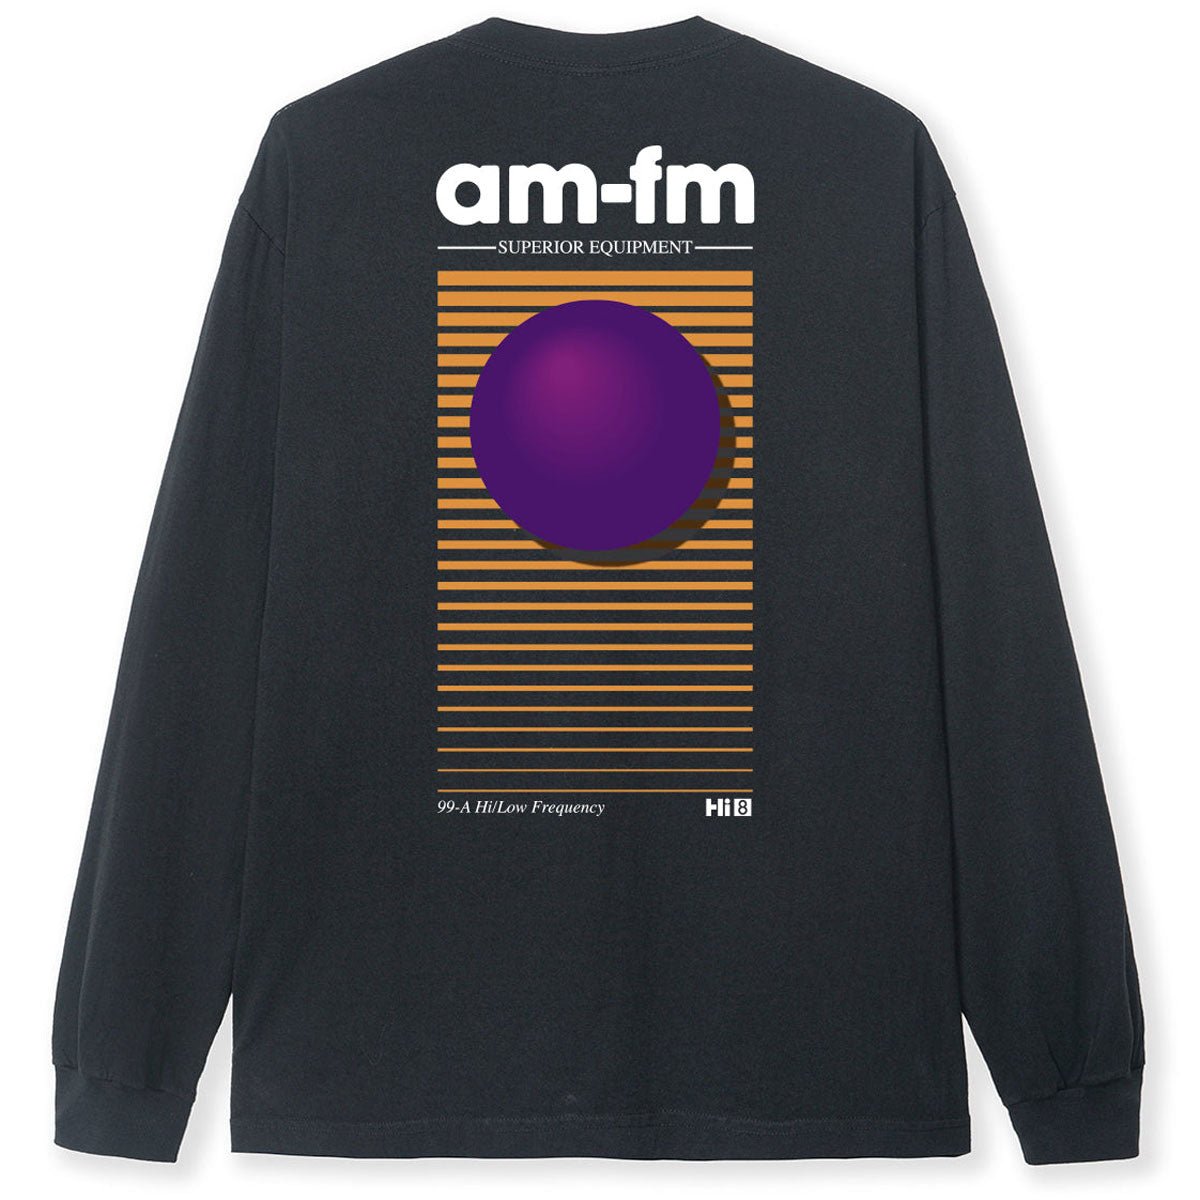 AM-FM Orb Long Sleeve T-Shirt - Black image 1